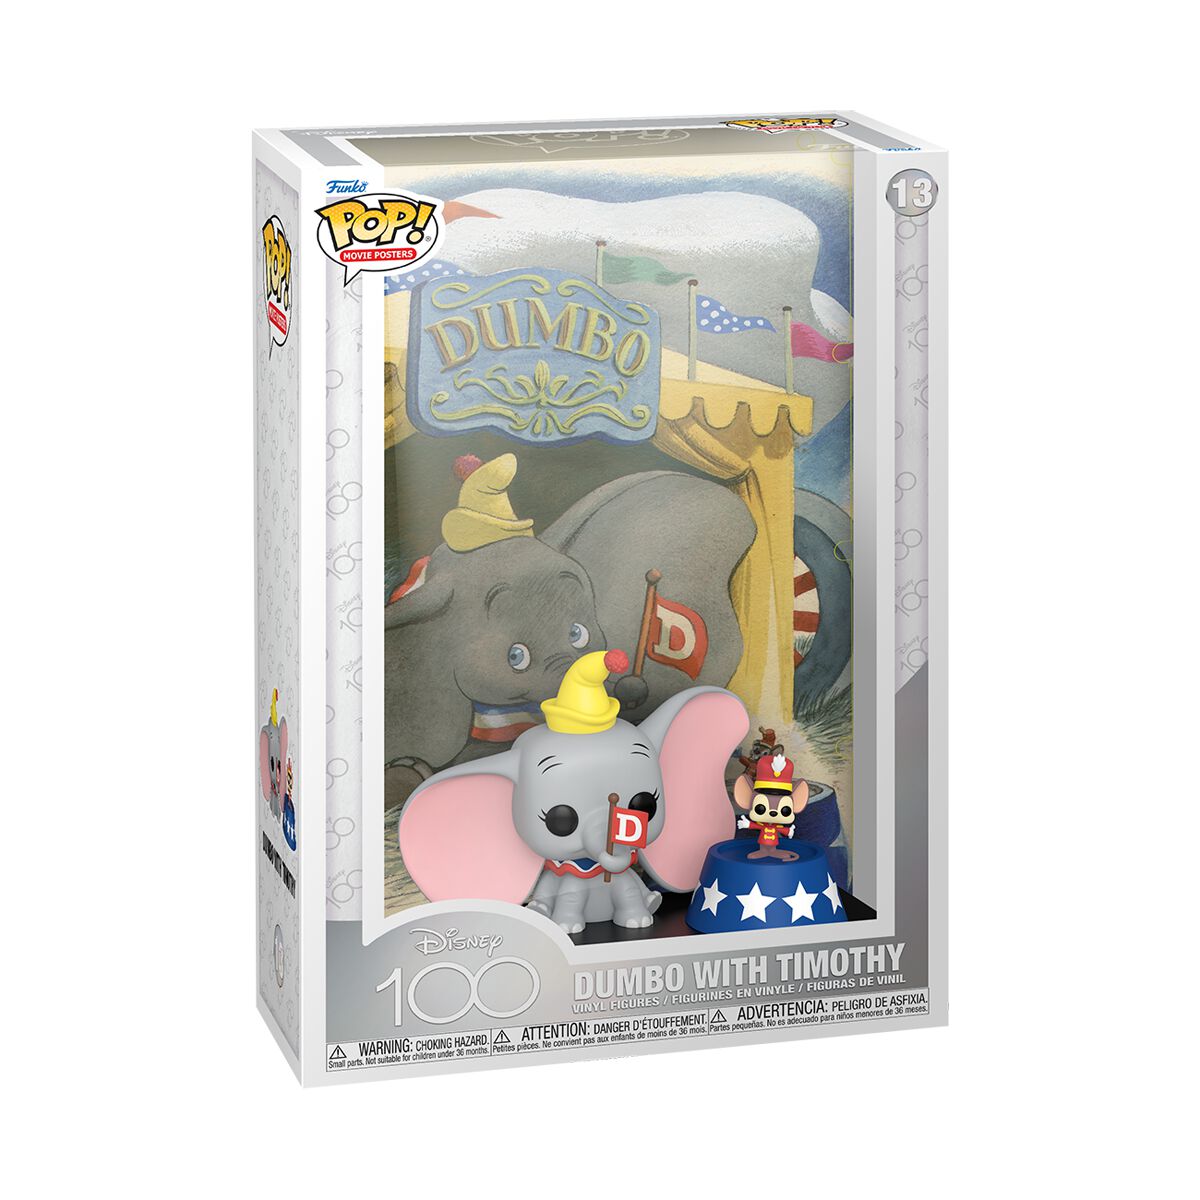 Dumbo with Timothy - Funko POP! Film poster vinyl figurine no. 13 - Funko Pop! - Funko Shop Europe product